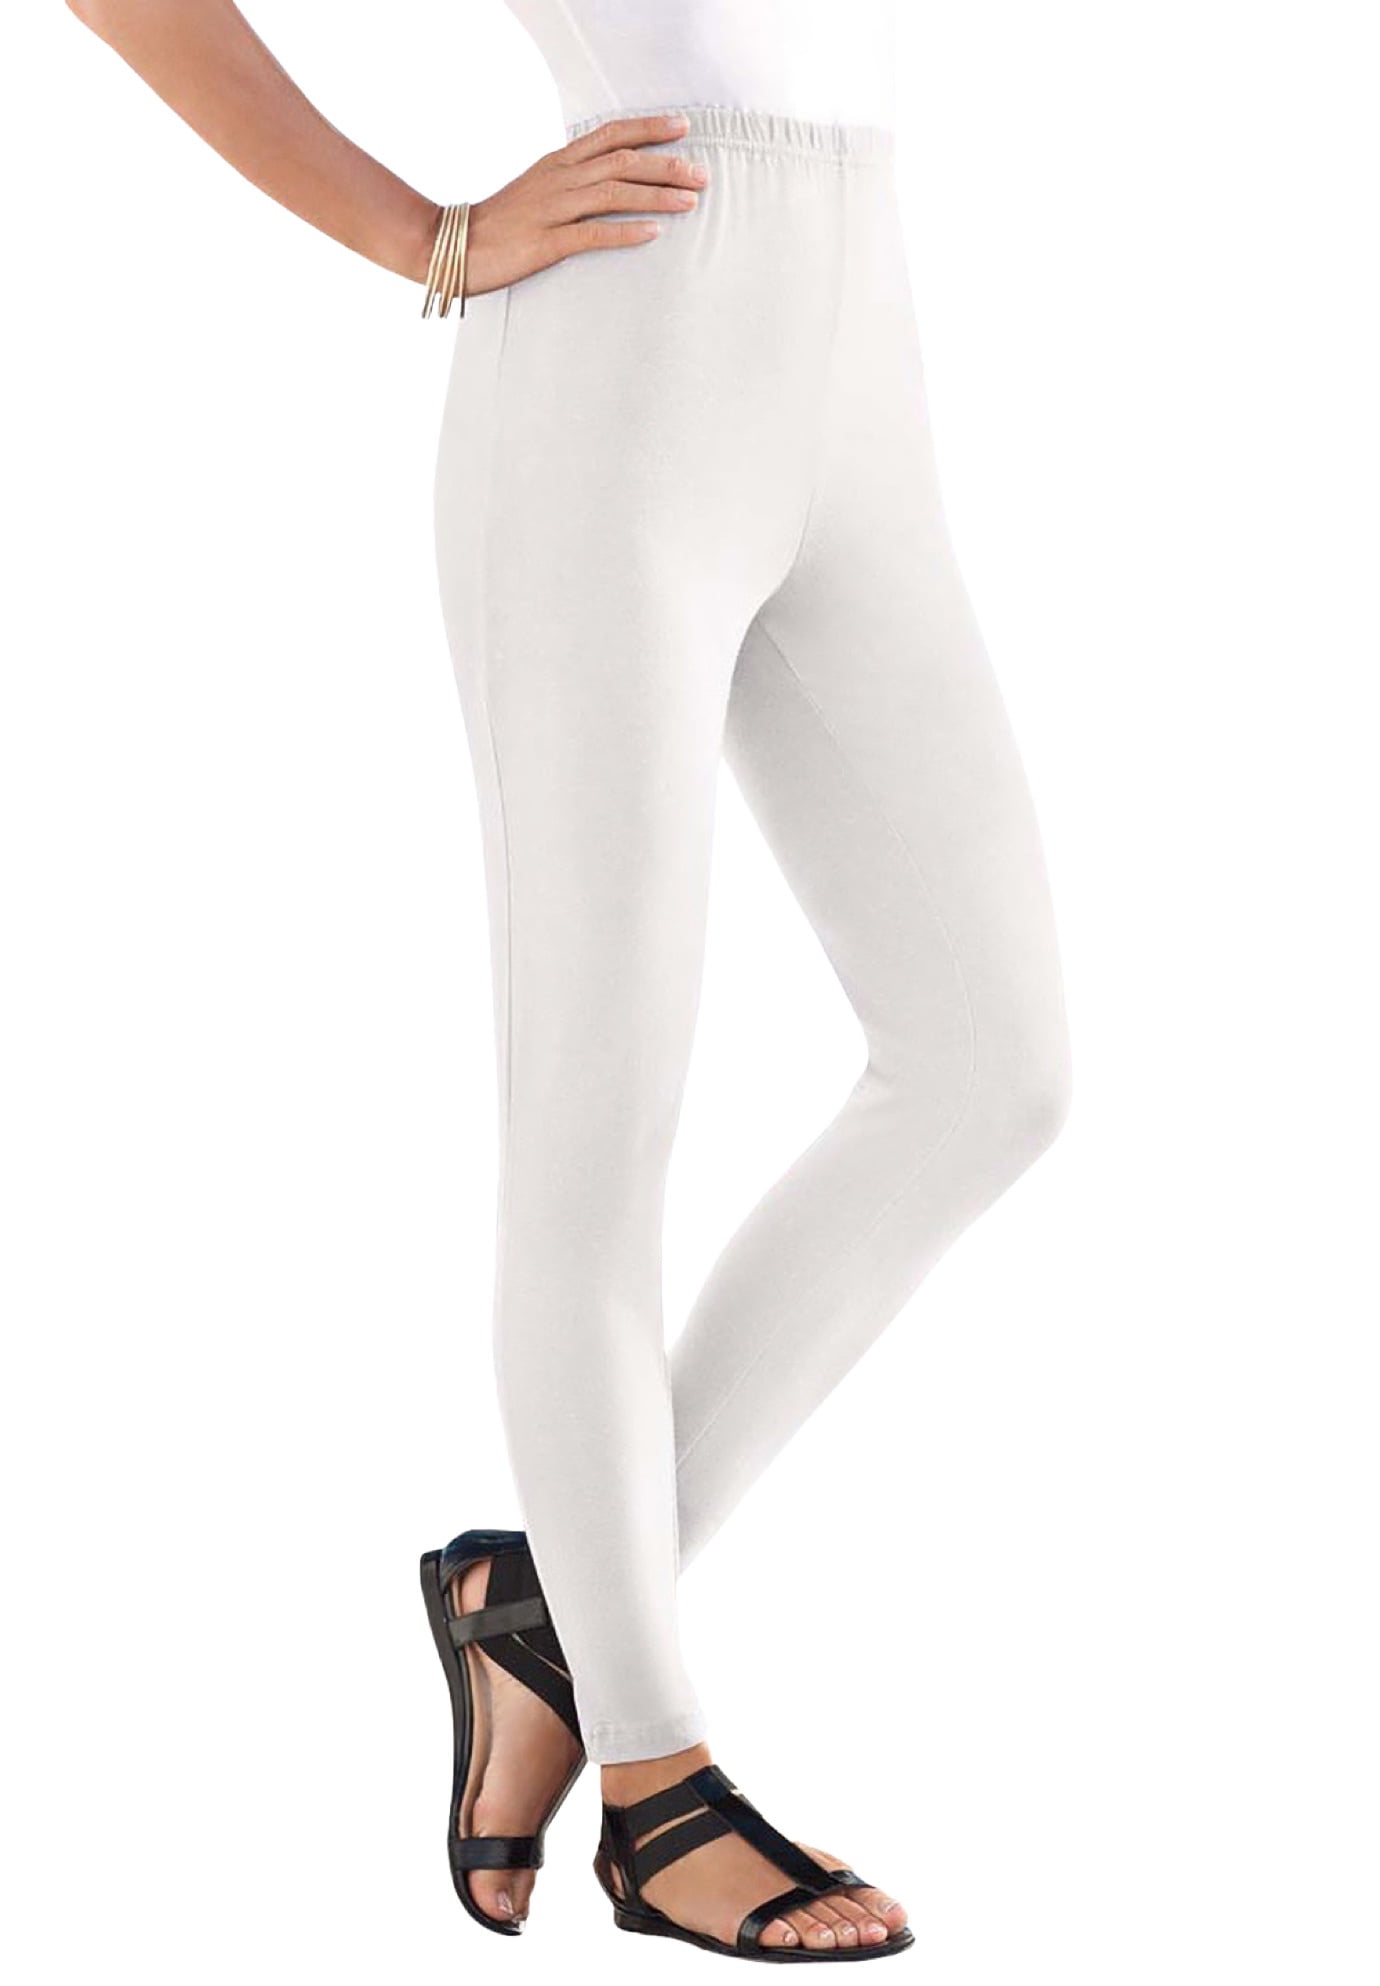 Roaman's Women's Plus Size Tall Essential Stretch Yoga Pant, 38/40